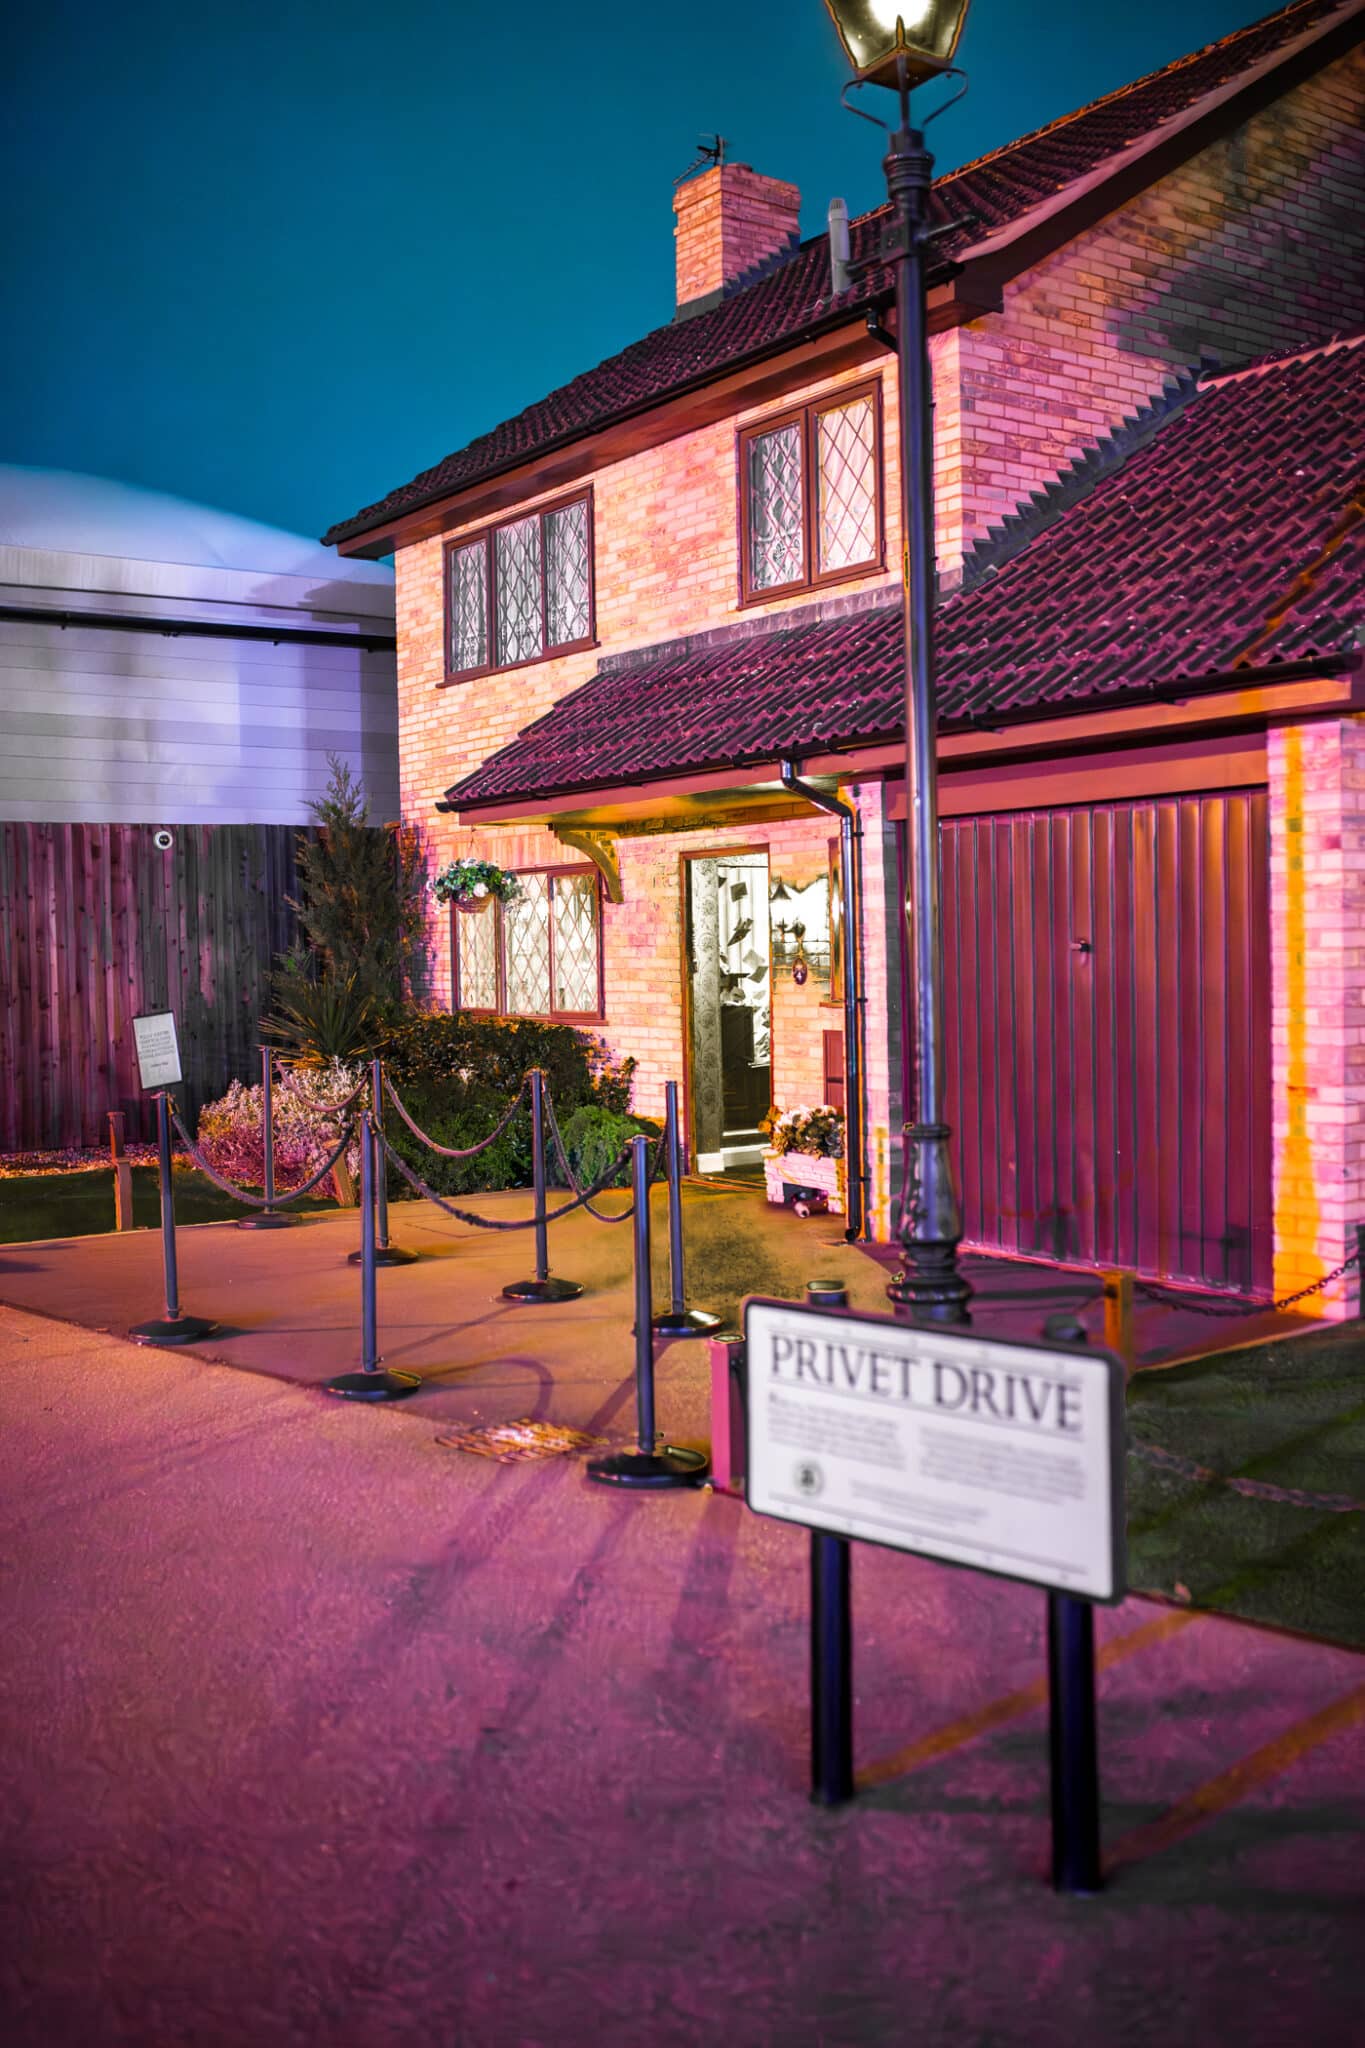 Privot Drive movie set at the Harry Potter Studios Tour in London. 